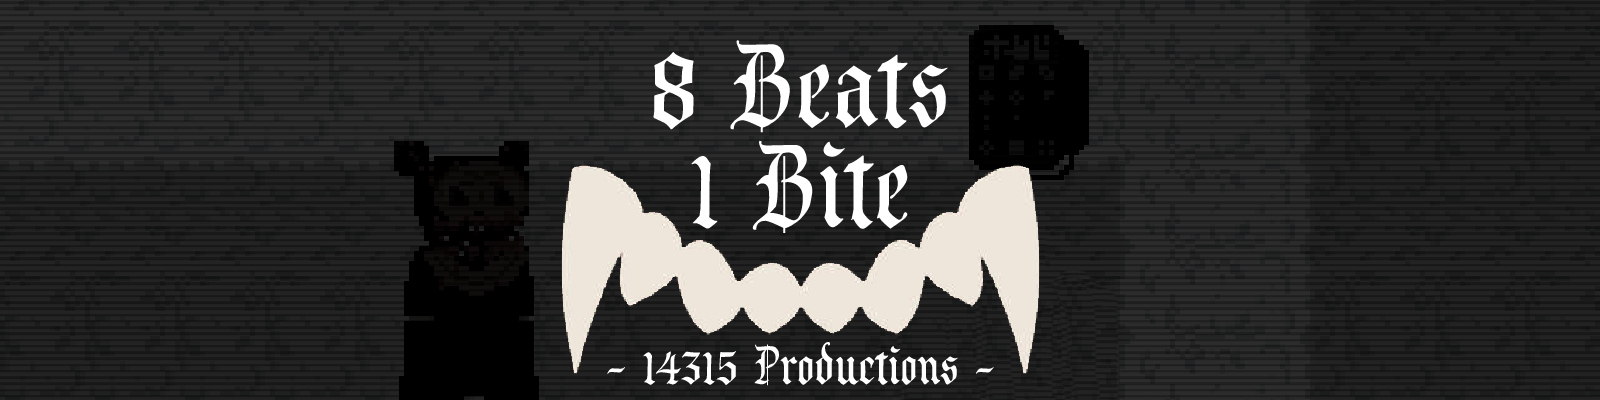 8 Beats 1 Bite